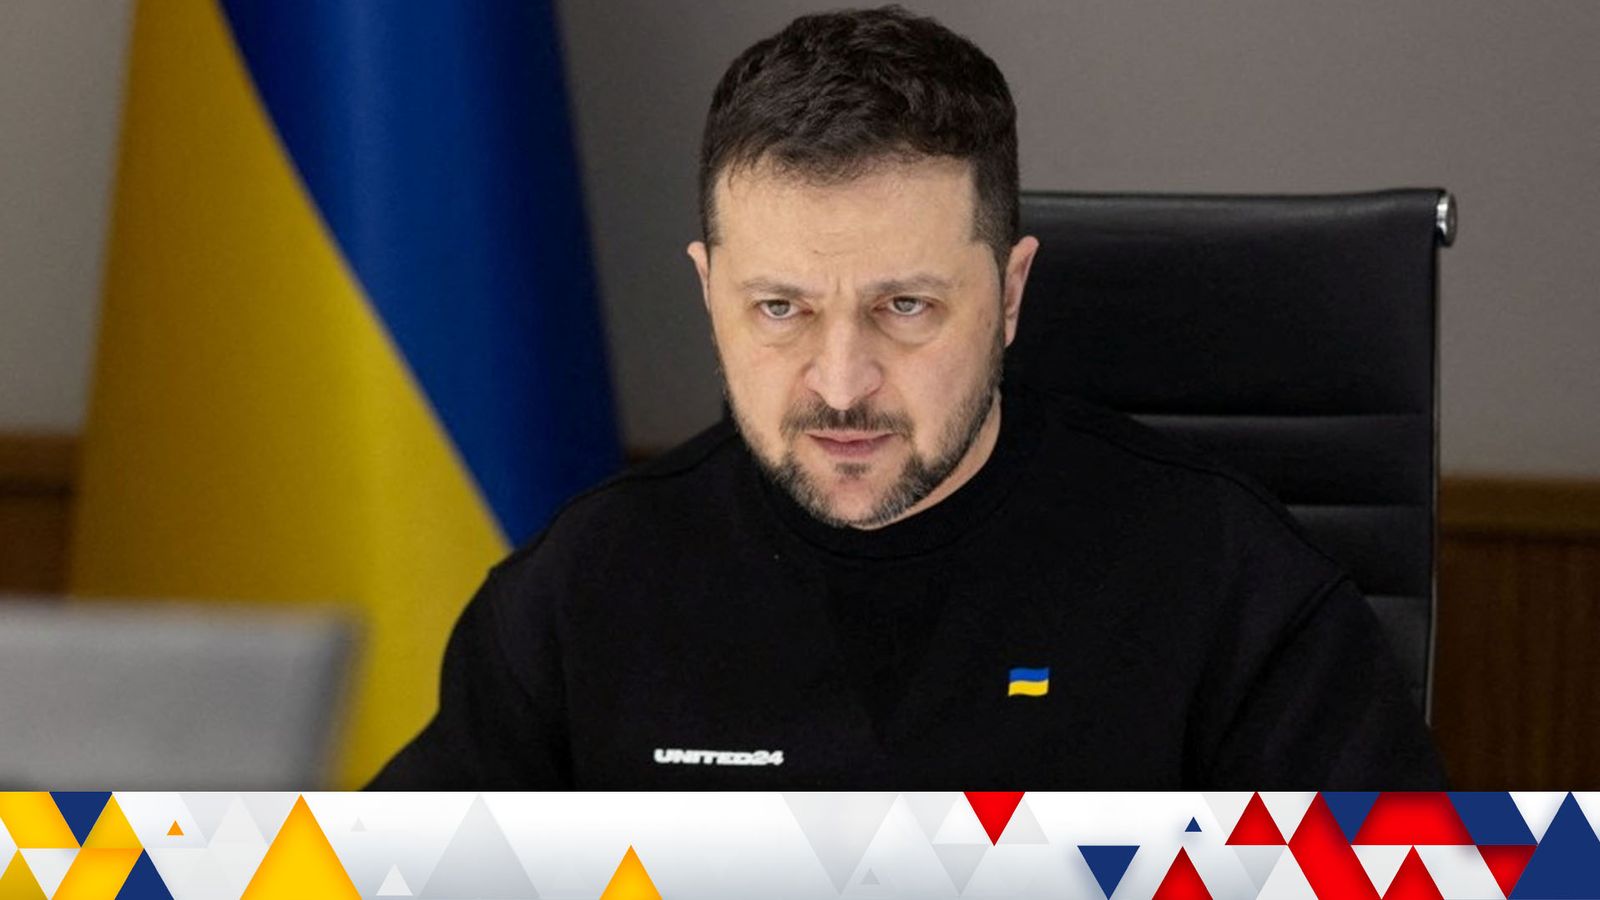 Volodymyr Zelenskyは、理由を明らかにせずにウクライナの最高指導者を解任します世界のニュース